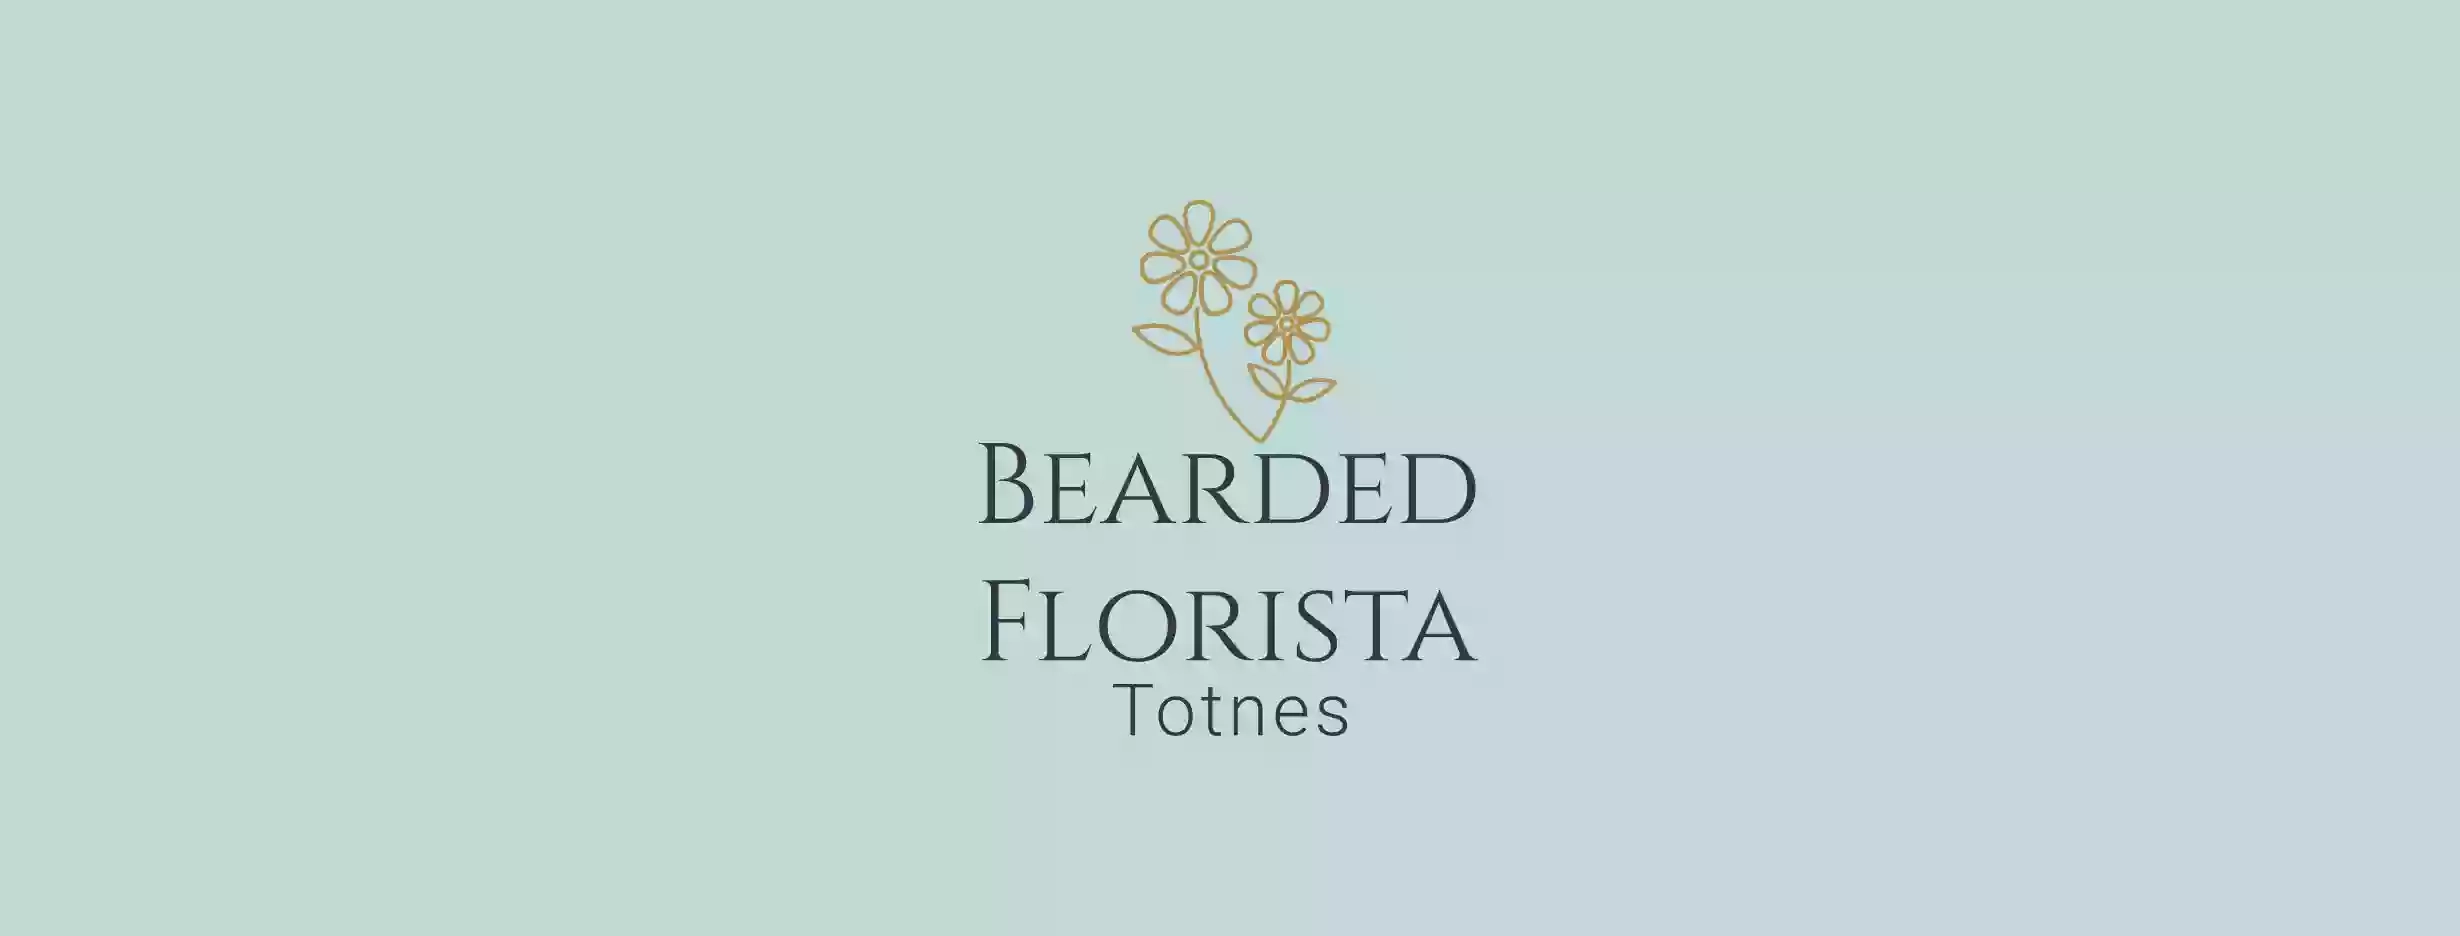 Bearded Florista